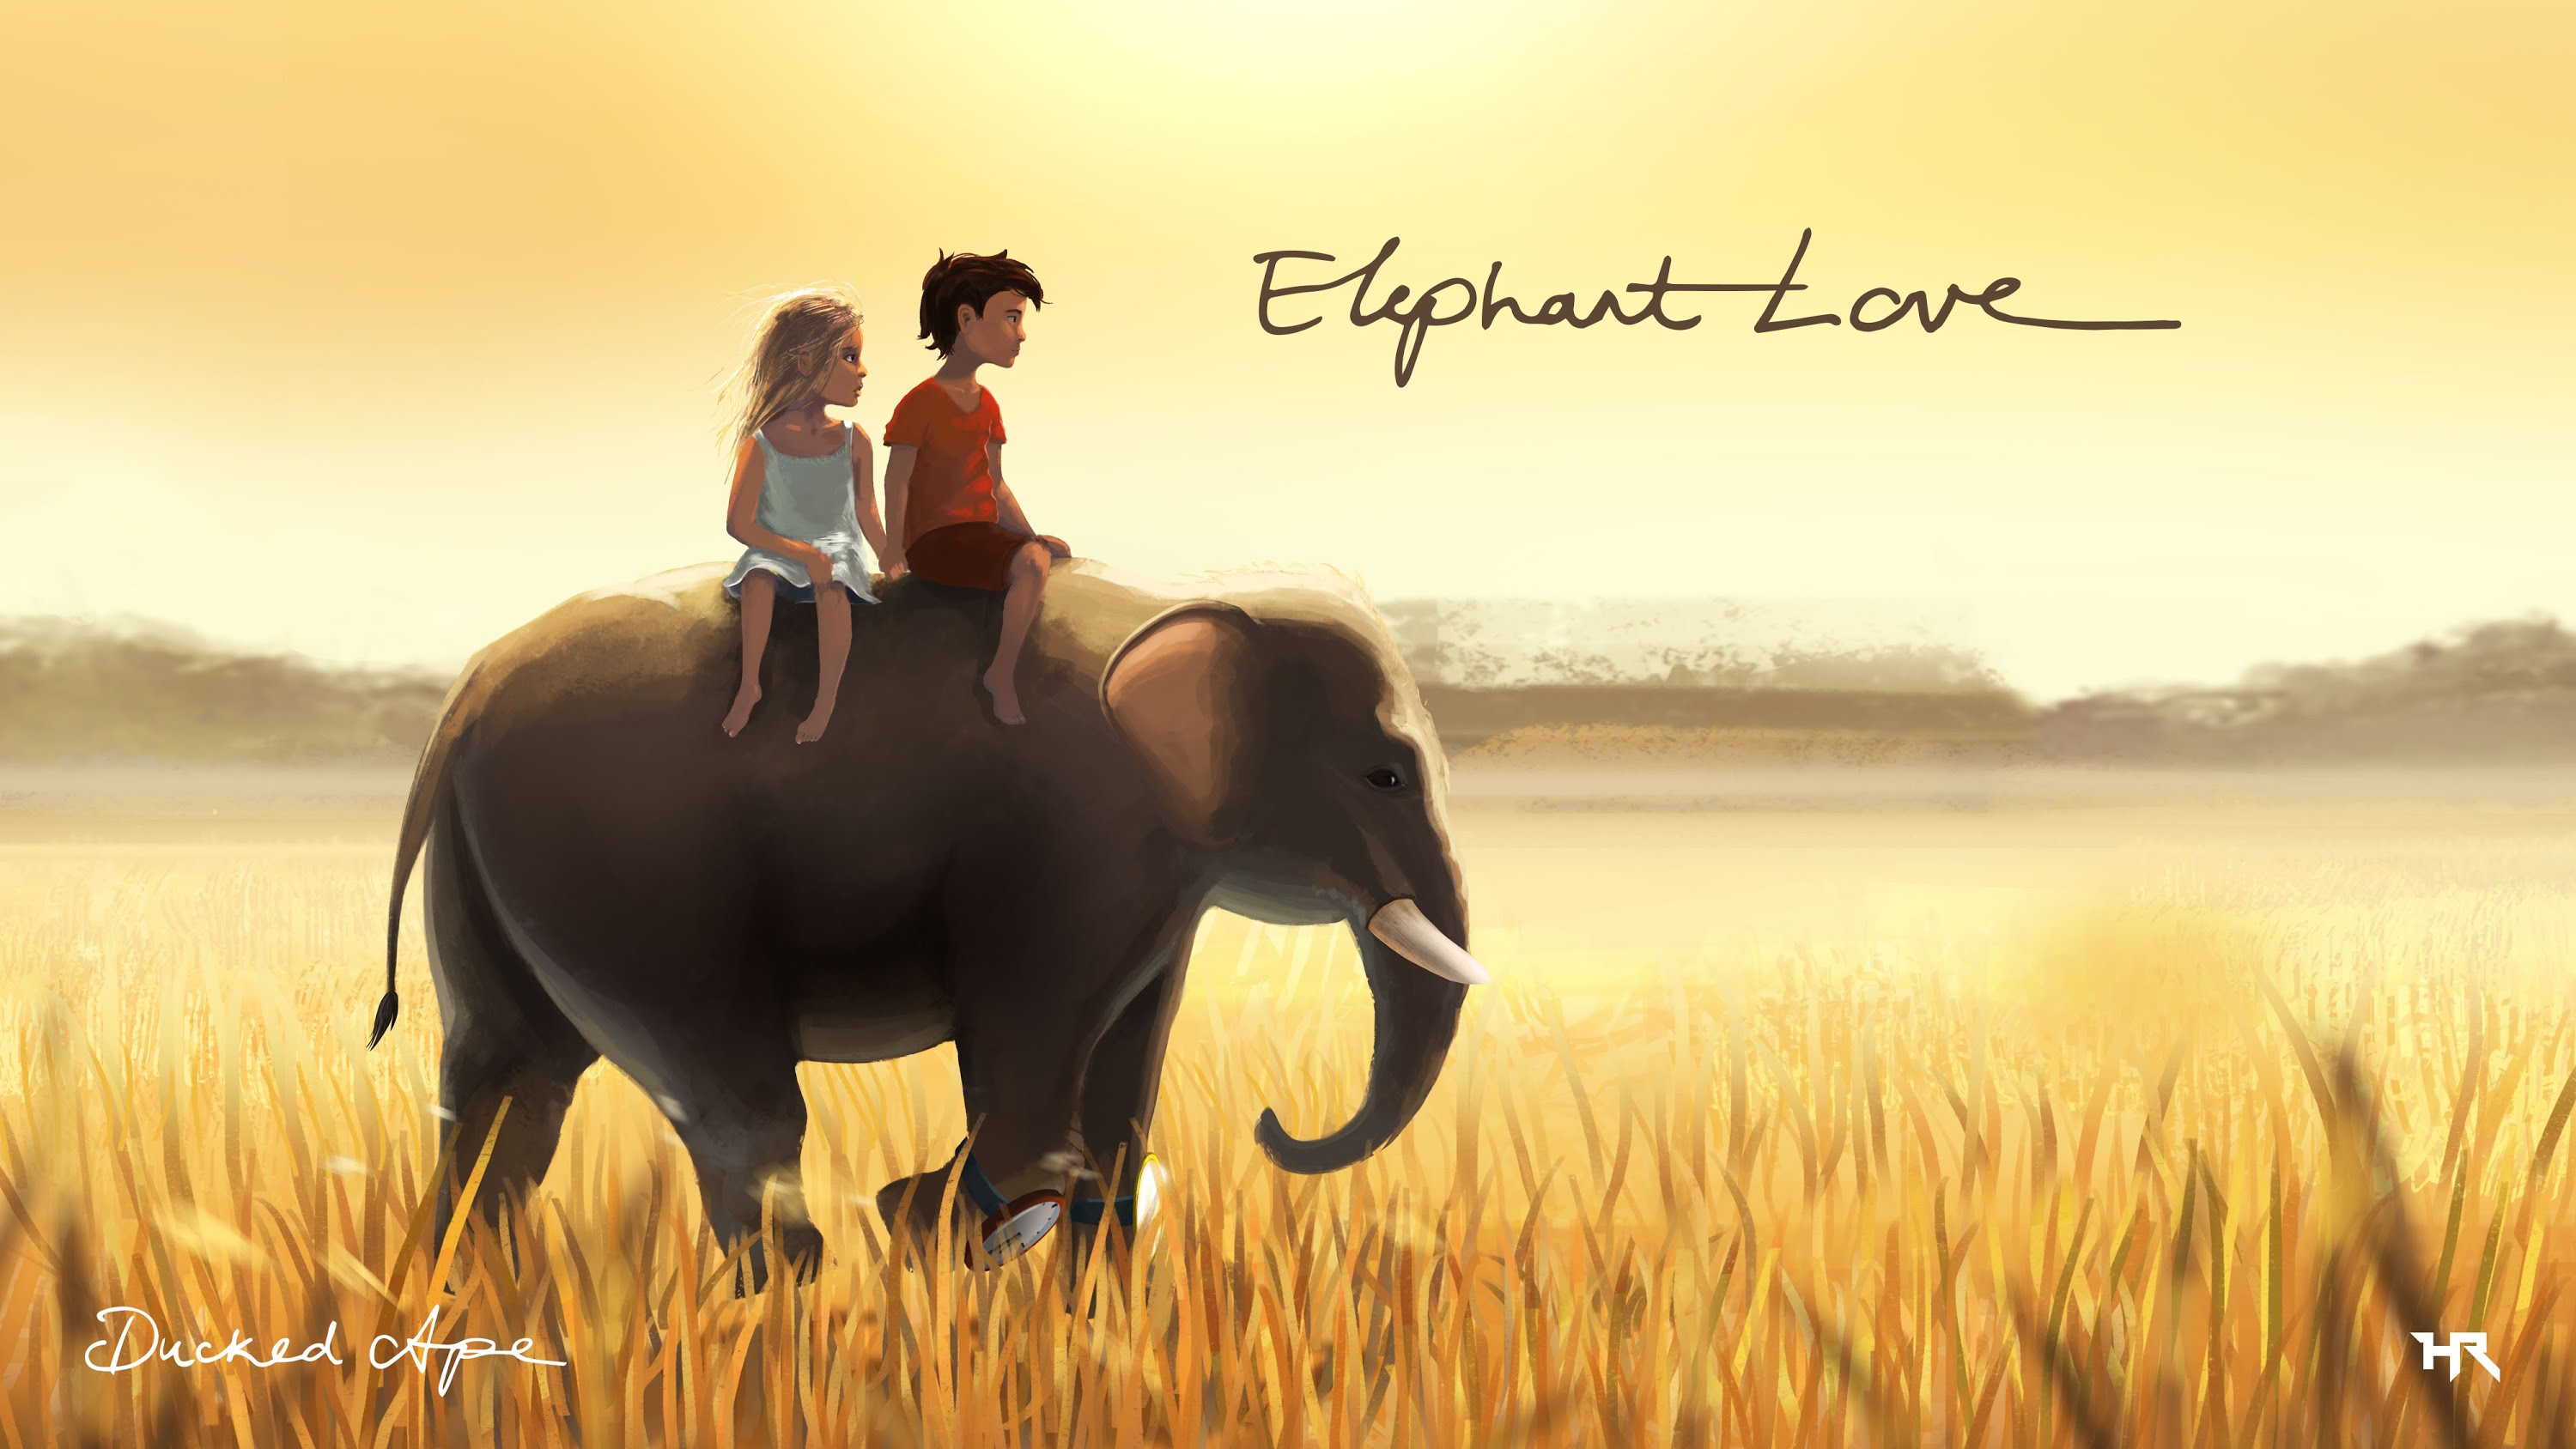 Ducked Ape - Elephant Love [Heroic] - YouTube